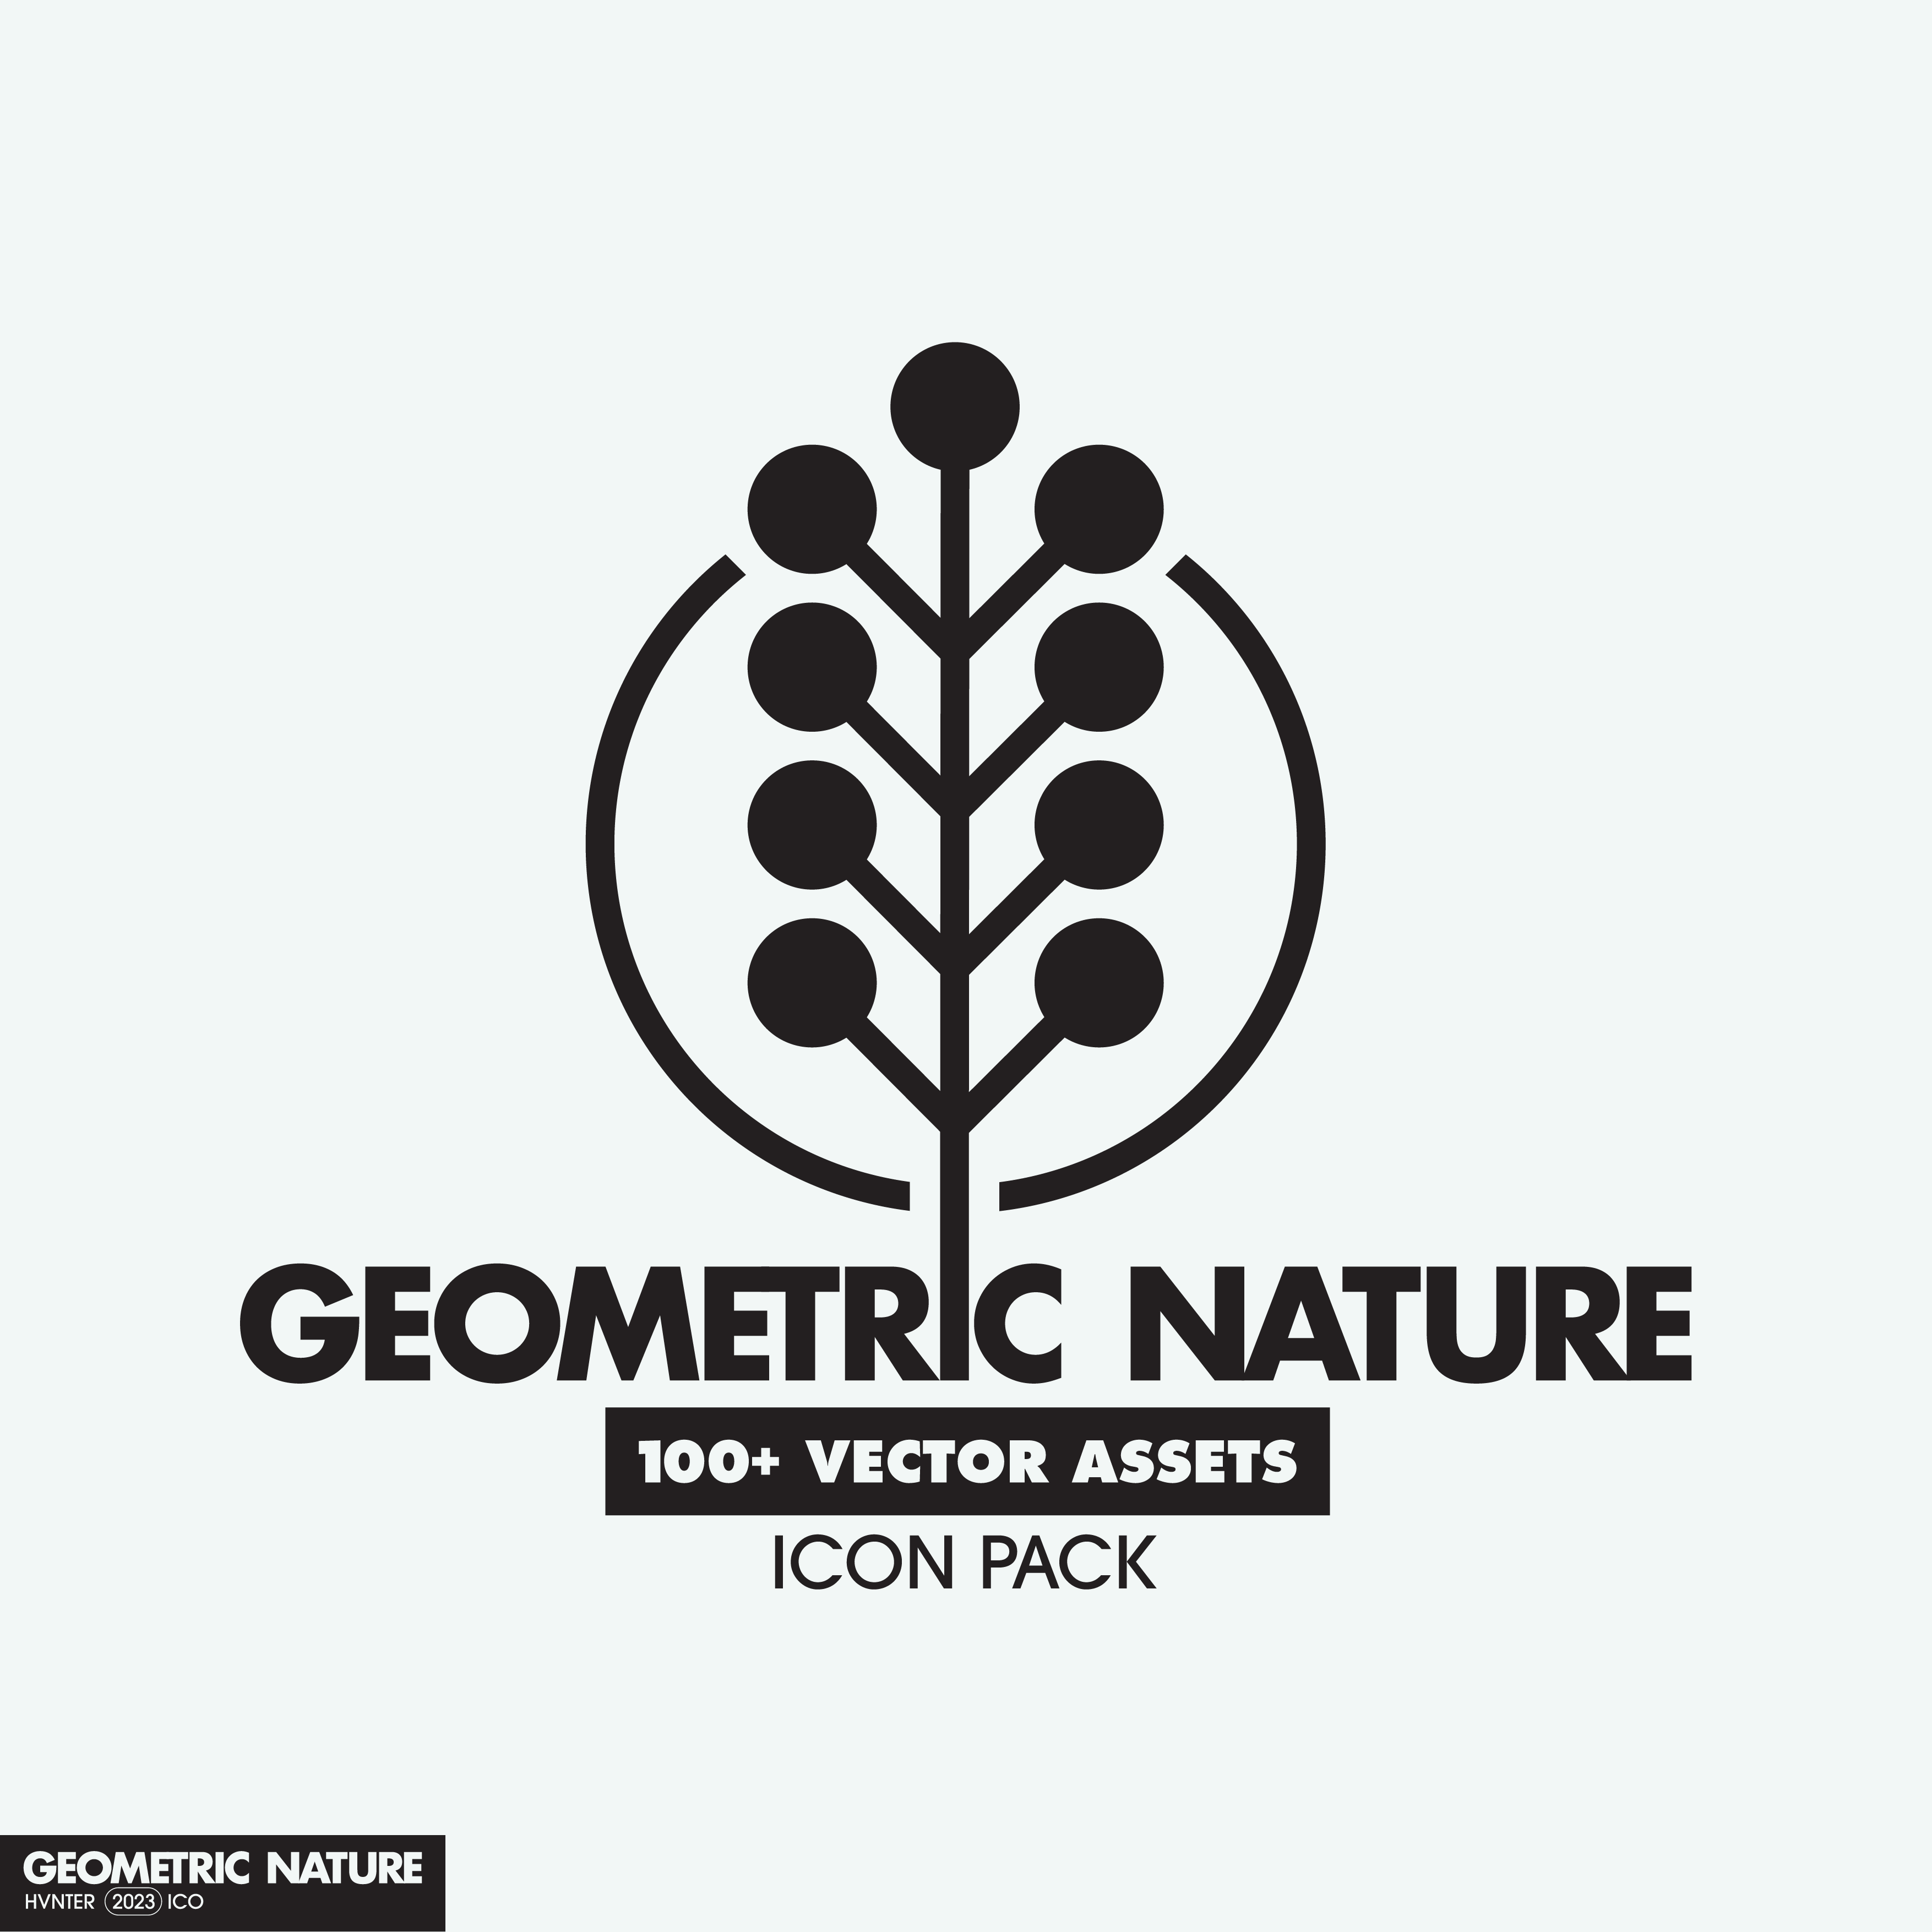 Geometric Nature